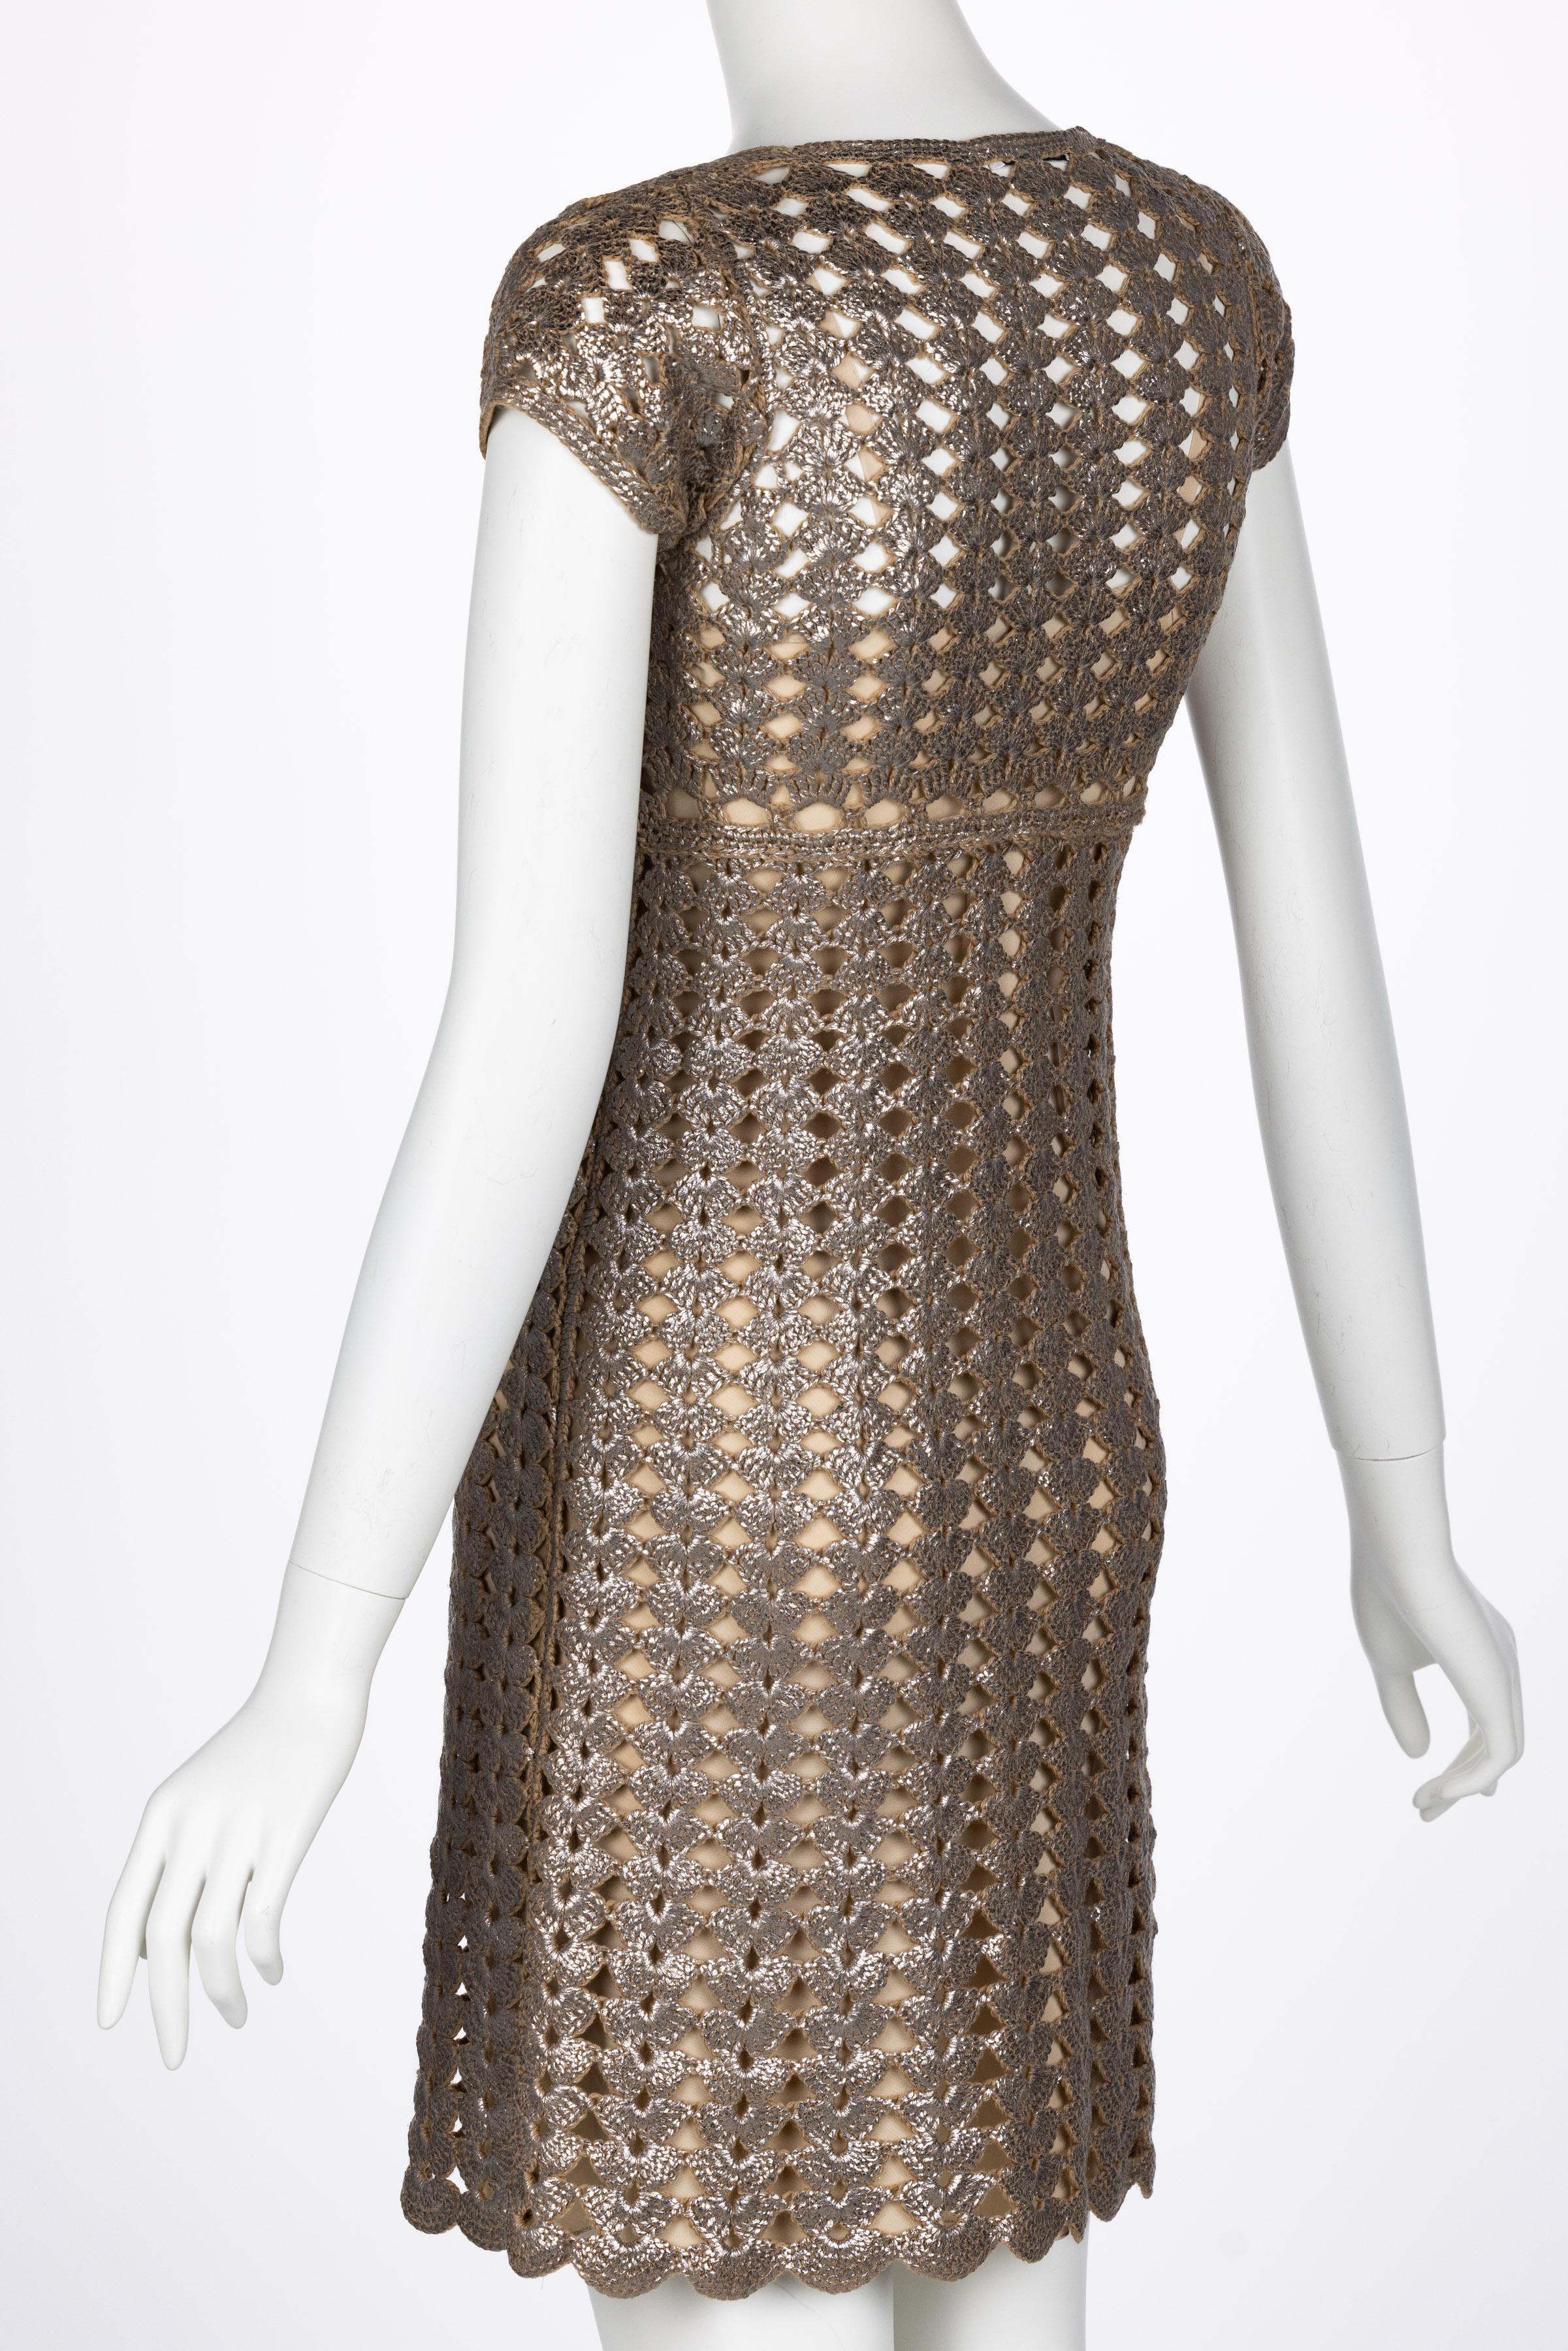 Prada Bronze Metallic Crochet Dress, 2000s For Sale 1